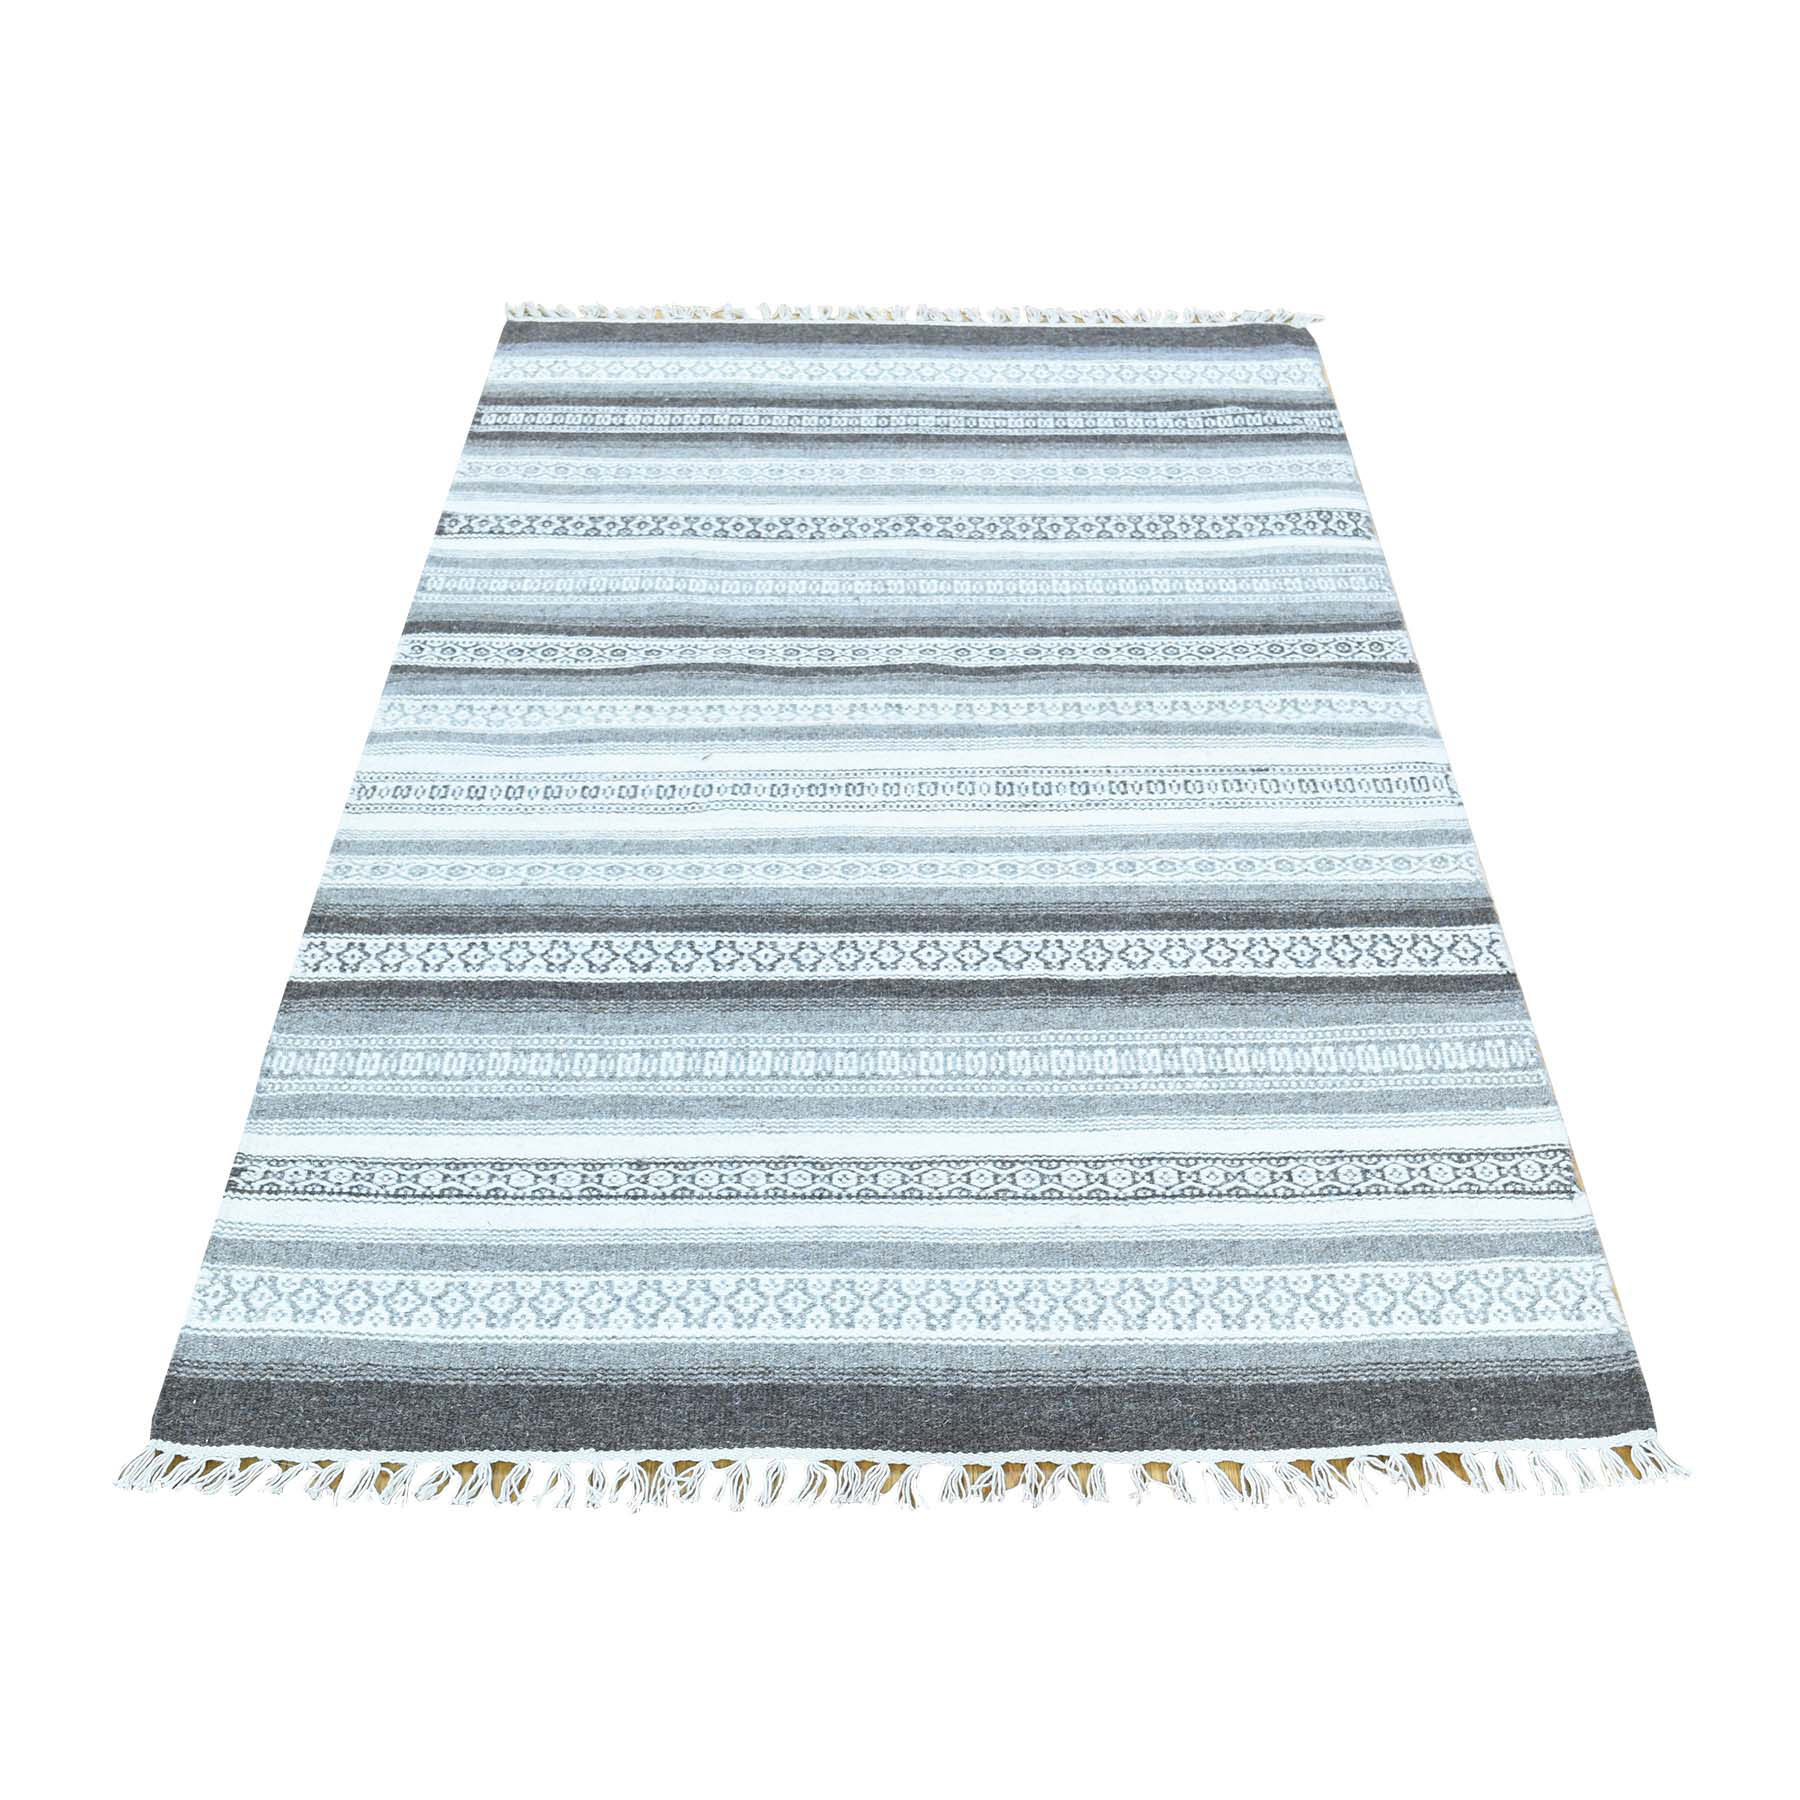 3'X5'1" Striped Reversible Kilim Hand-Woven Oriental Flat Weave Rug moaca869